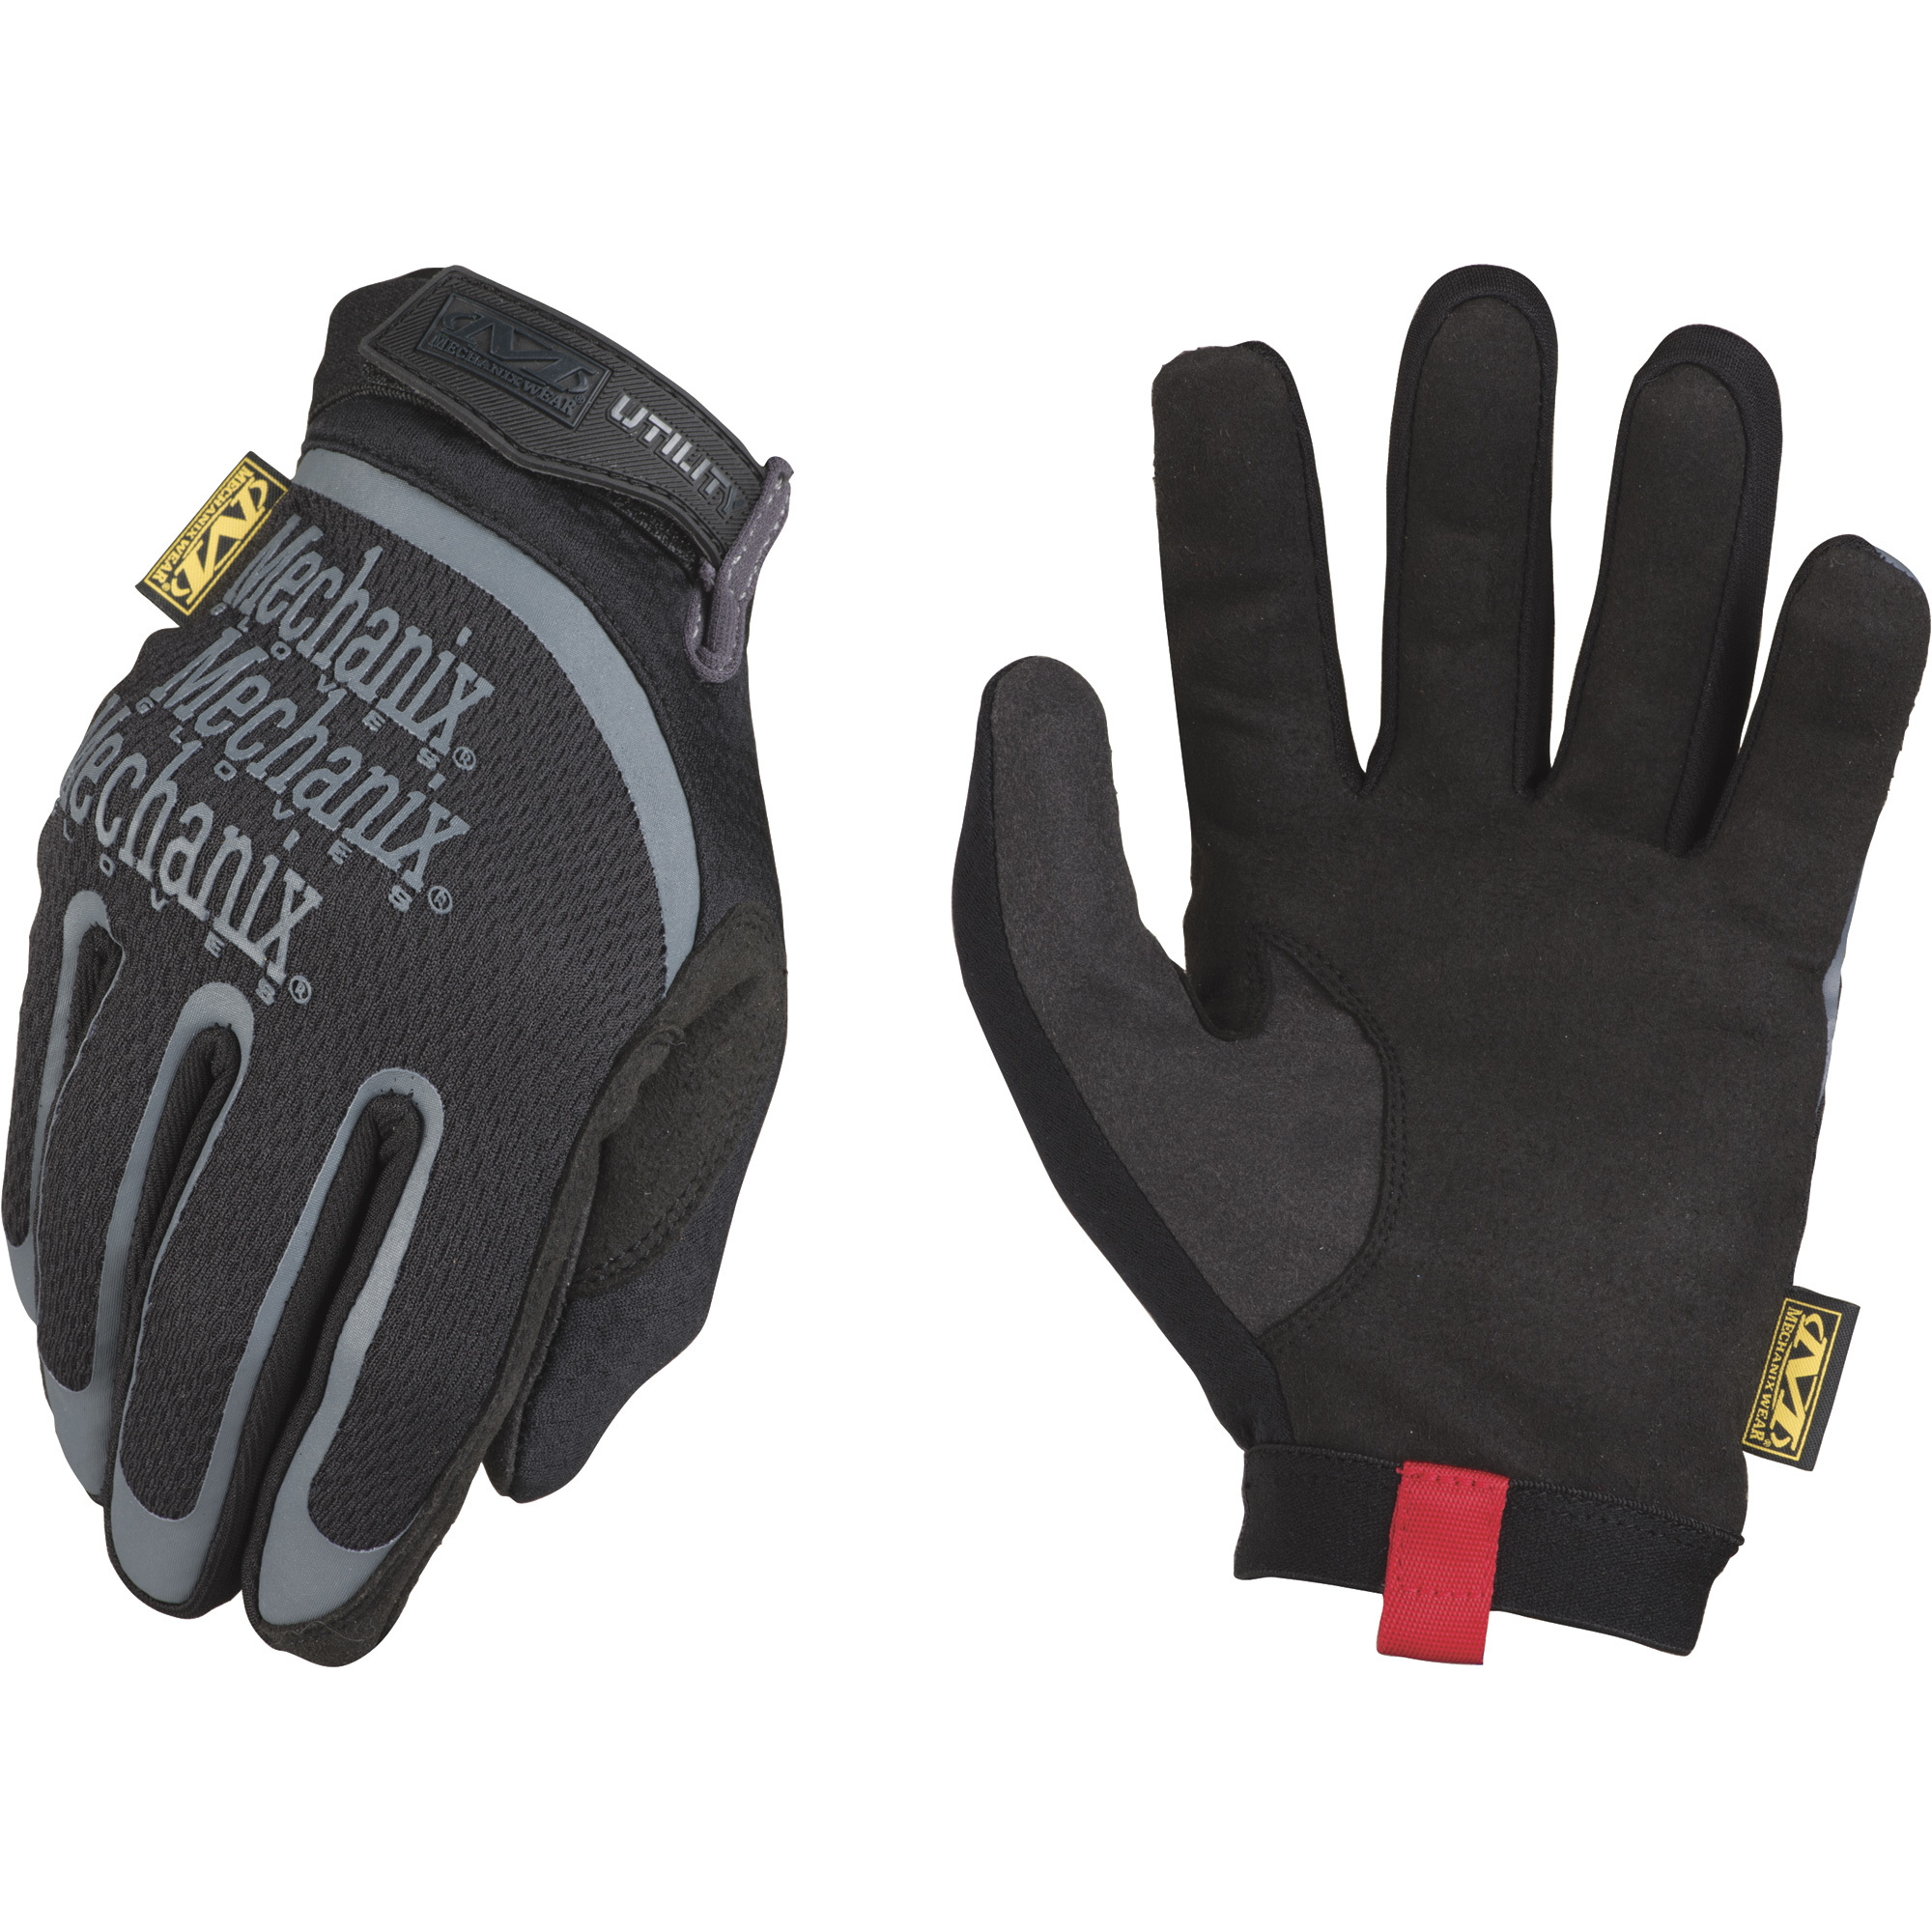 Mechanix Men's Wear Utility 1.5 Gloves - Black, Large, Model H15-05-010